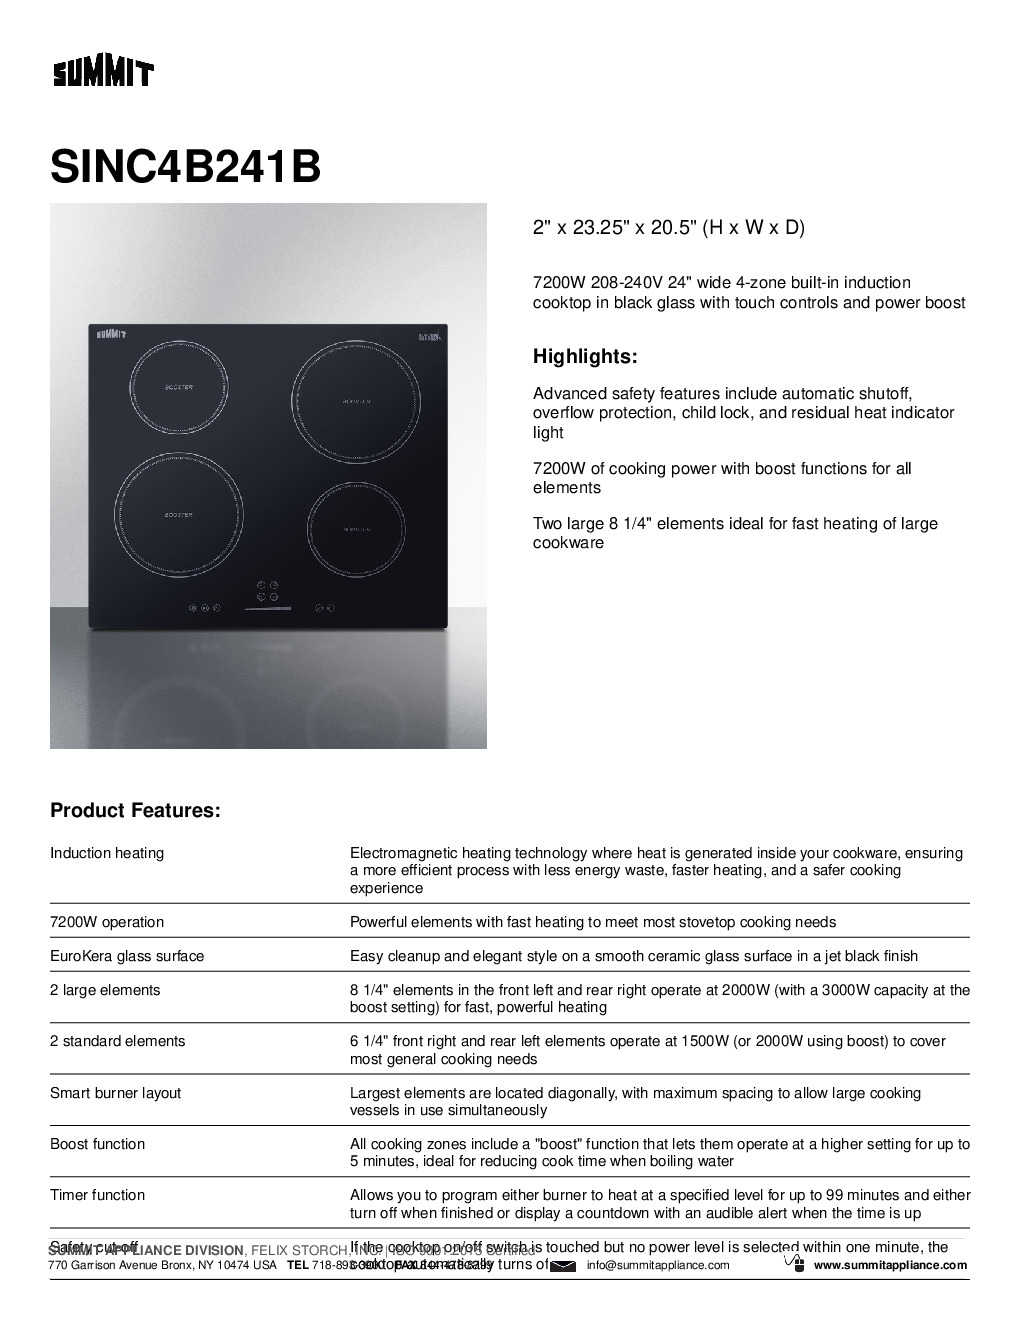 Summit SINC4B241B Built-In / Drop-In Induction Range